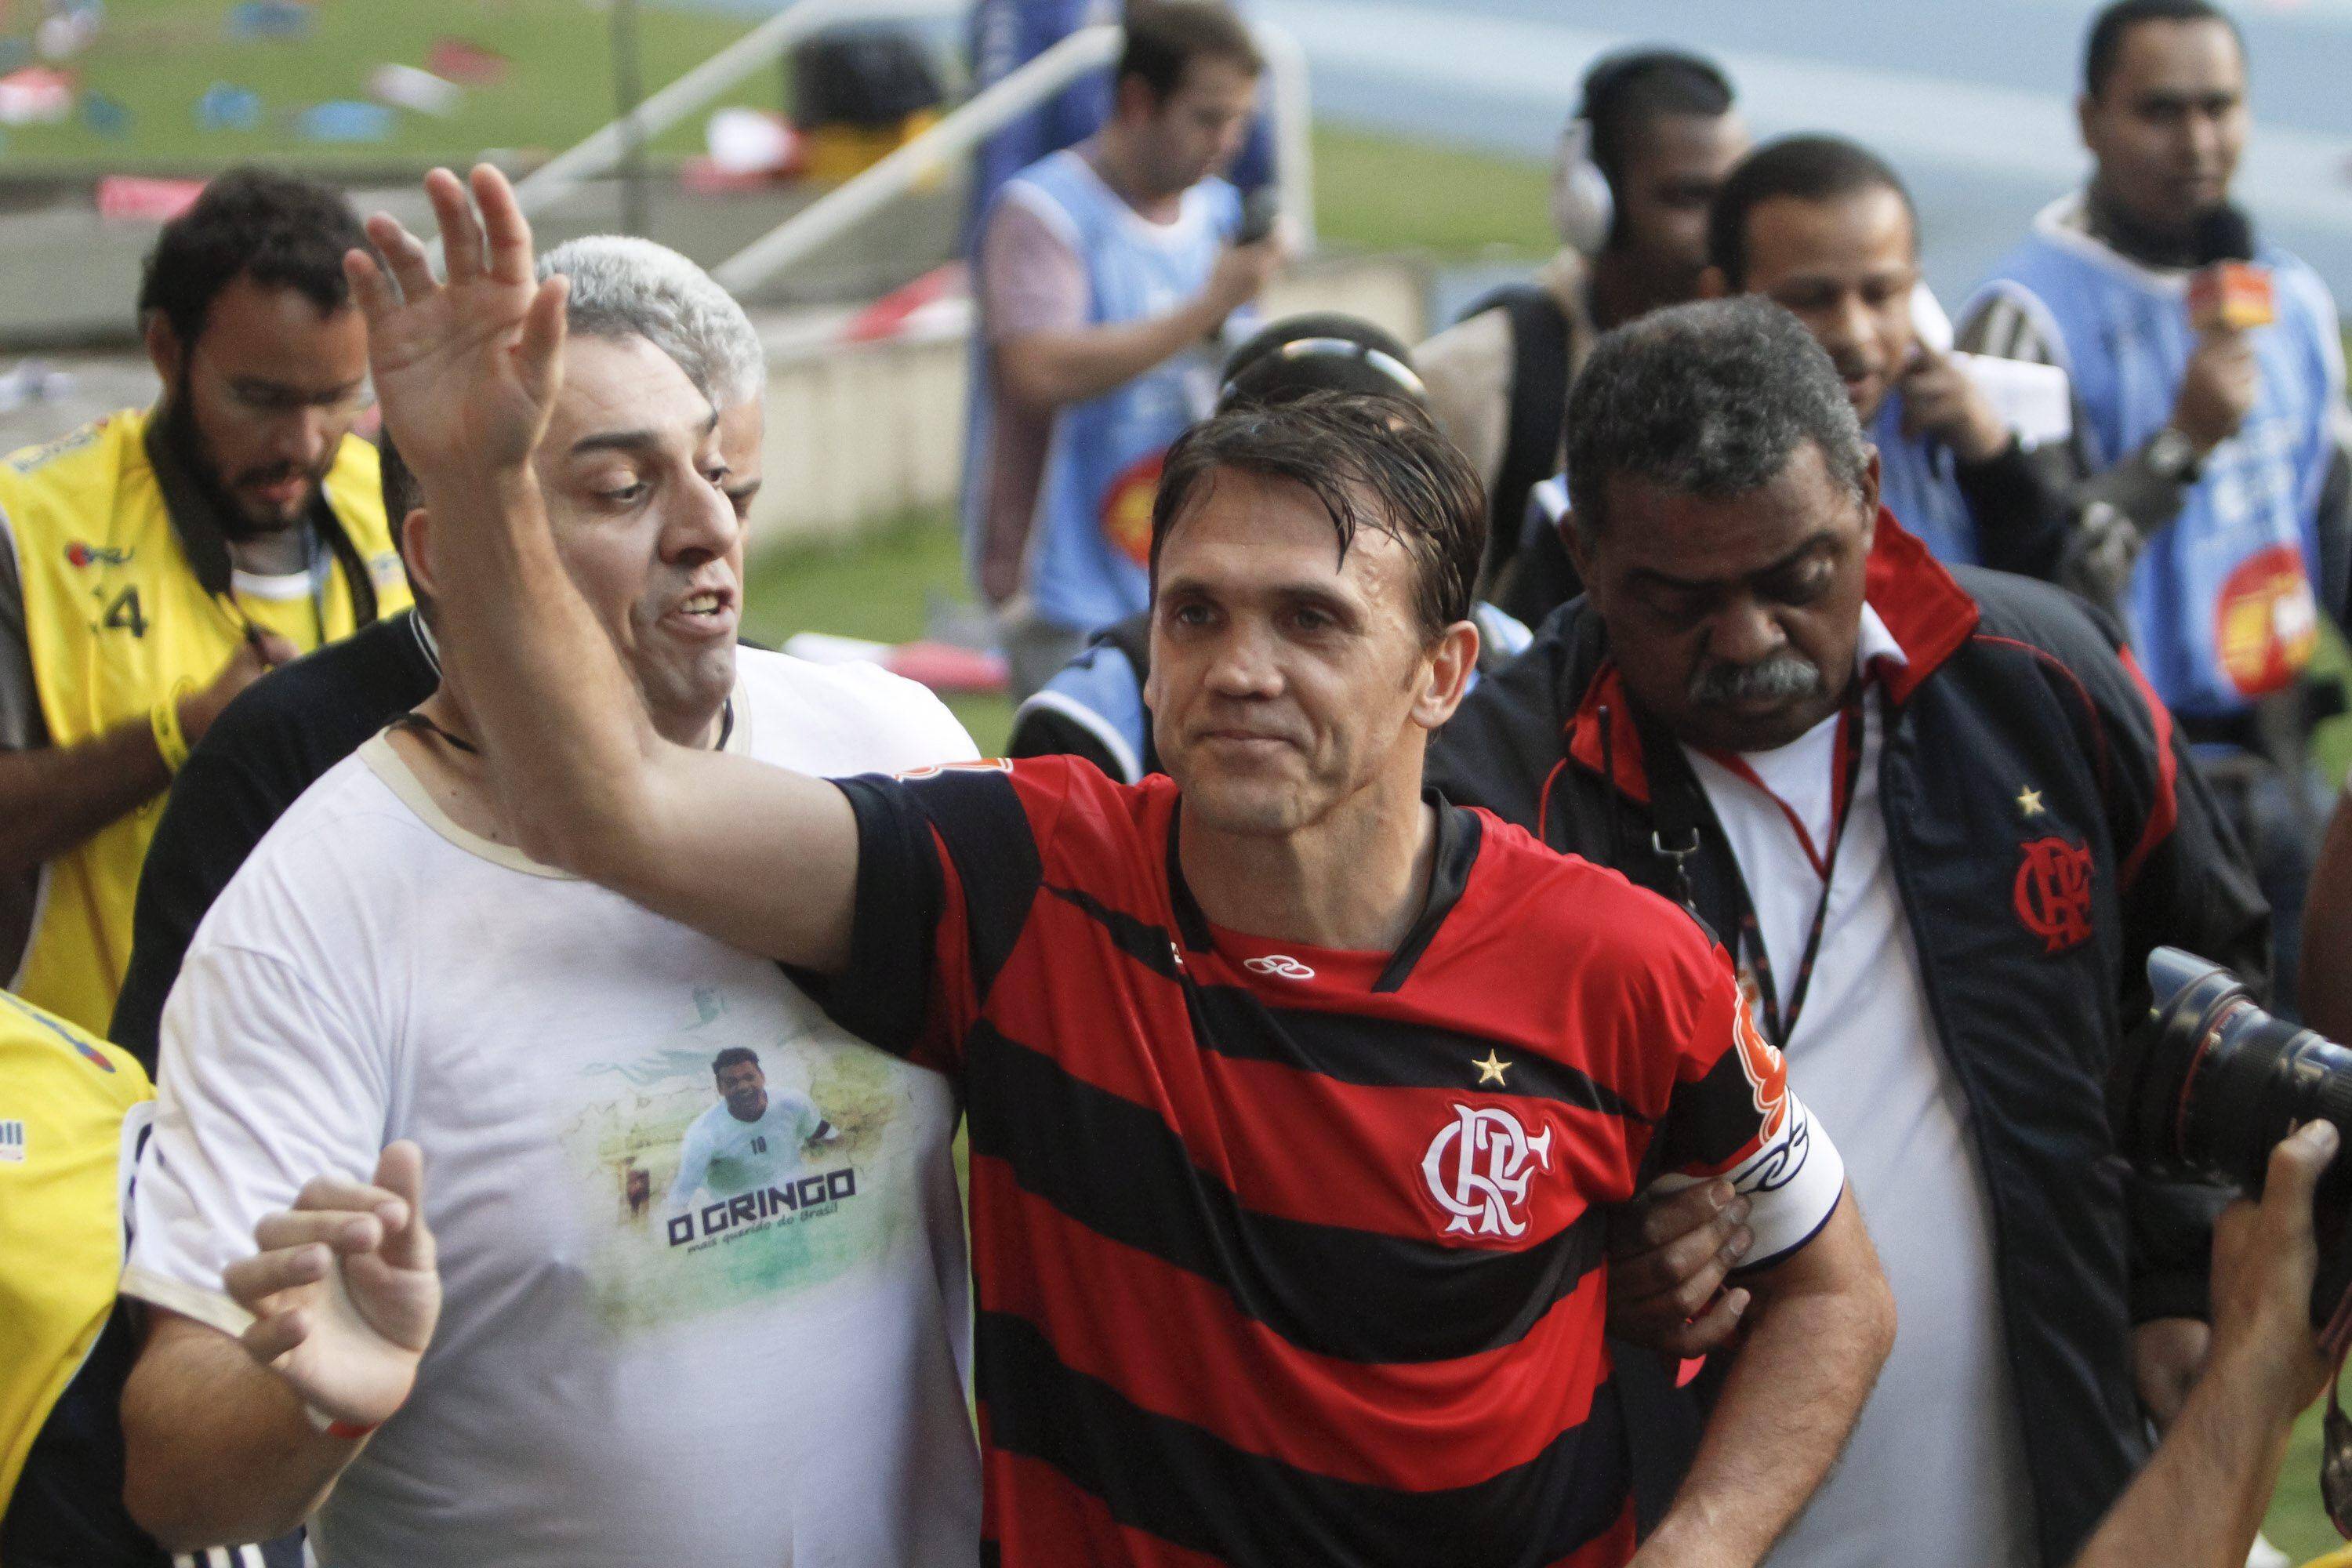 Foto: Agência O Globo